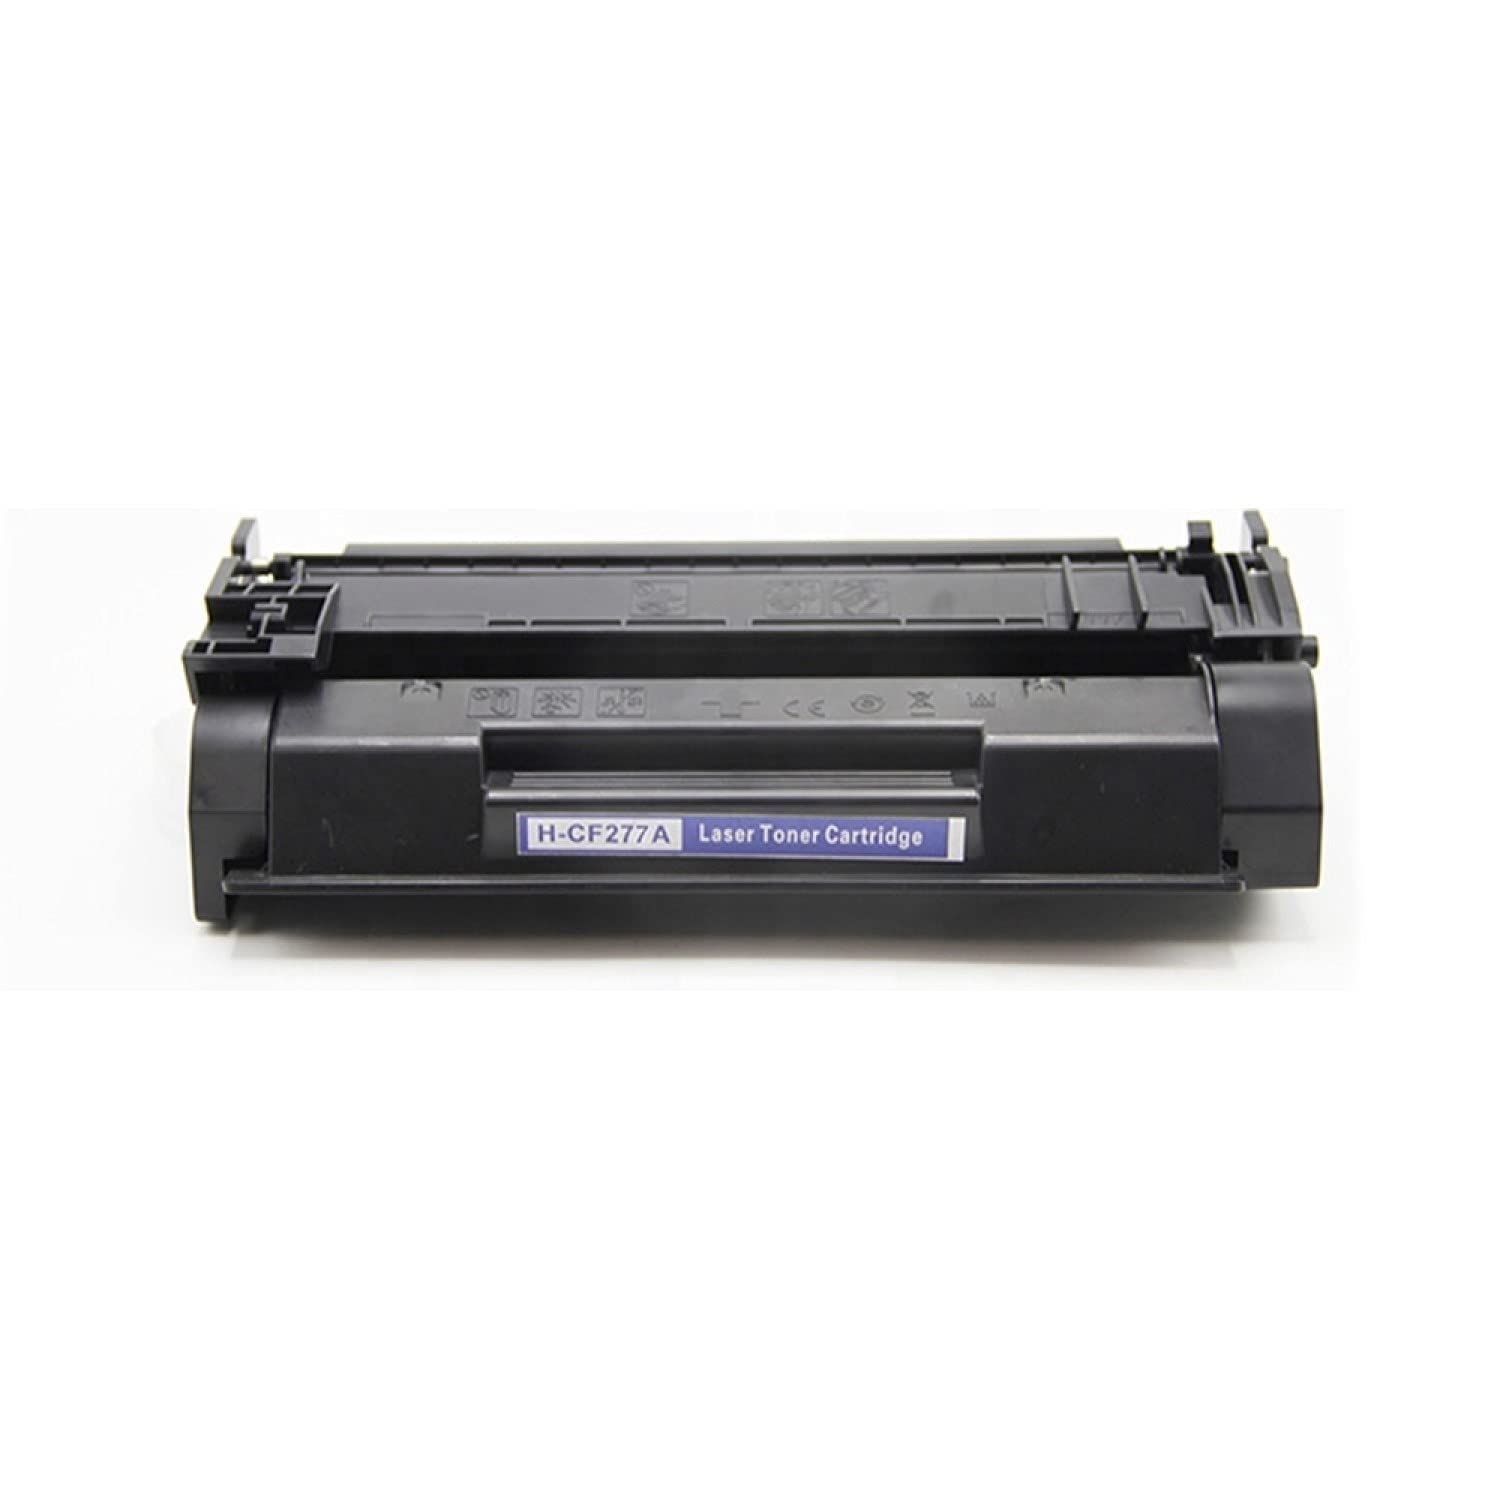 KOSH 77A Black / CF277A Toner Cartridge for HP M305, M329, M405, M407, M429, M429dw, M429fdn, M429fdw, M431 Printers